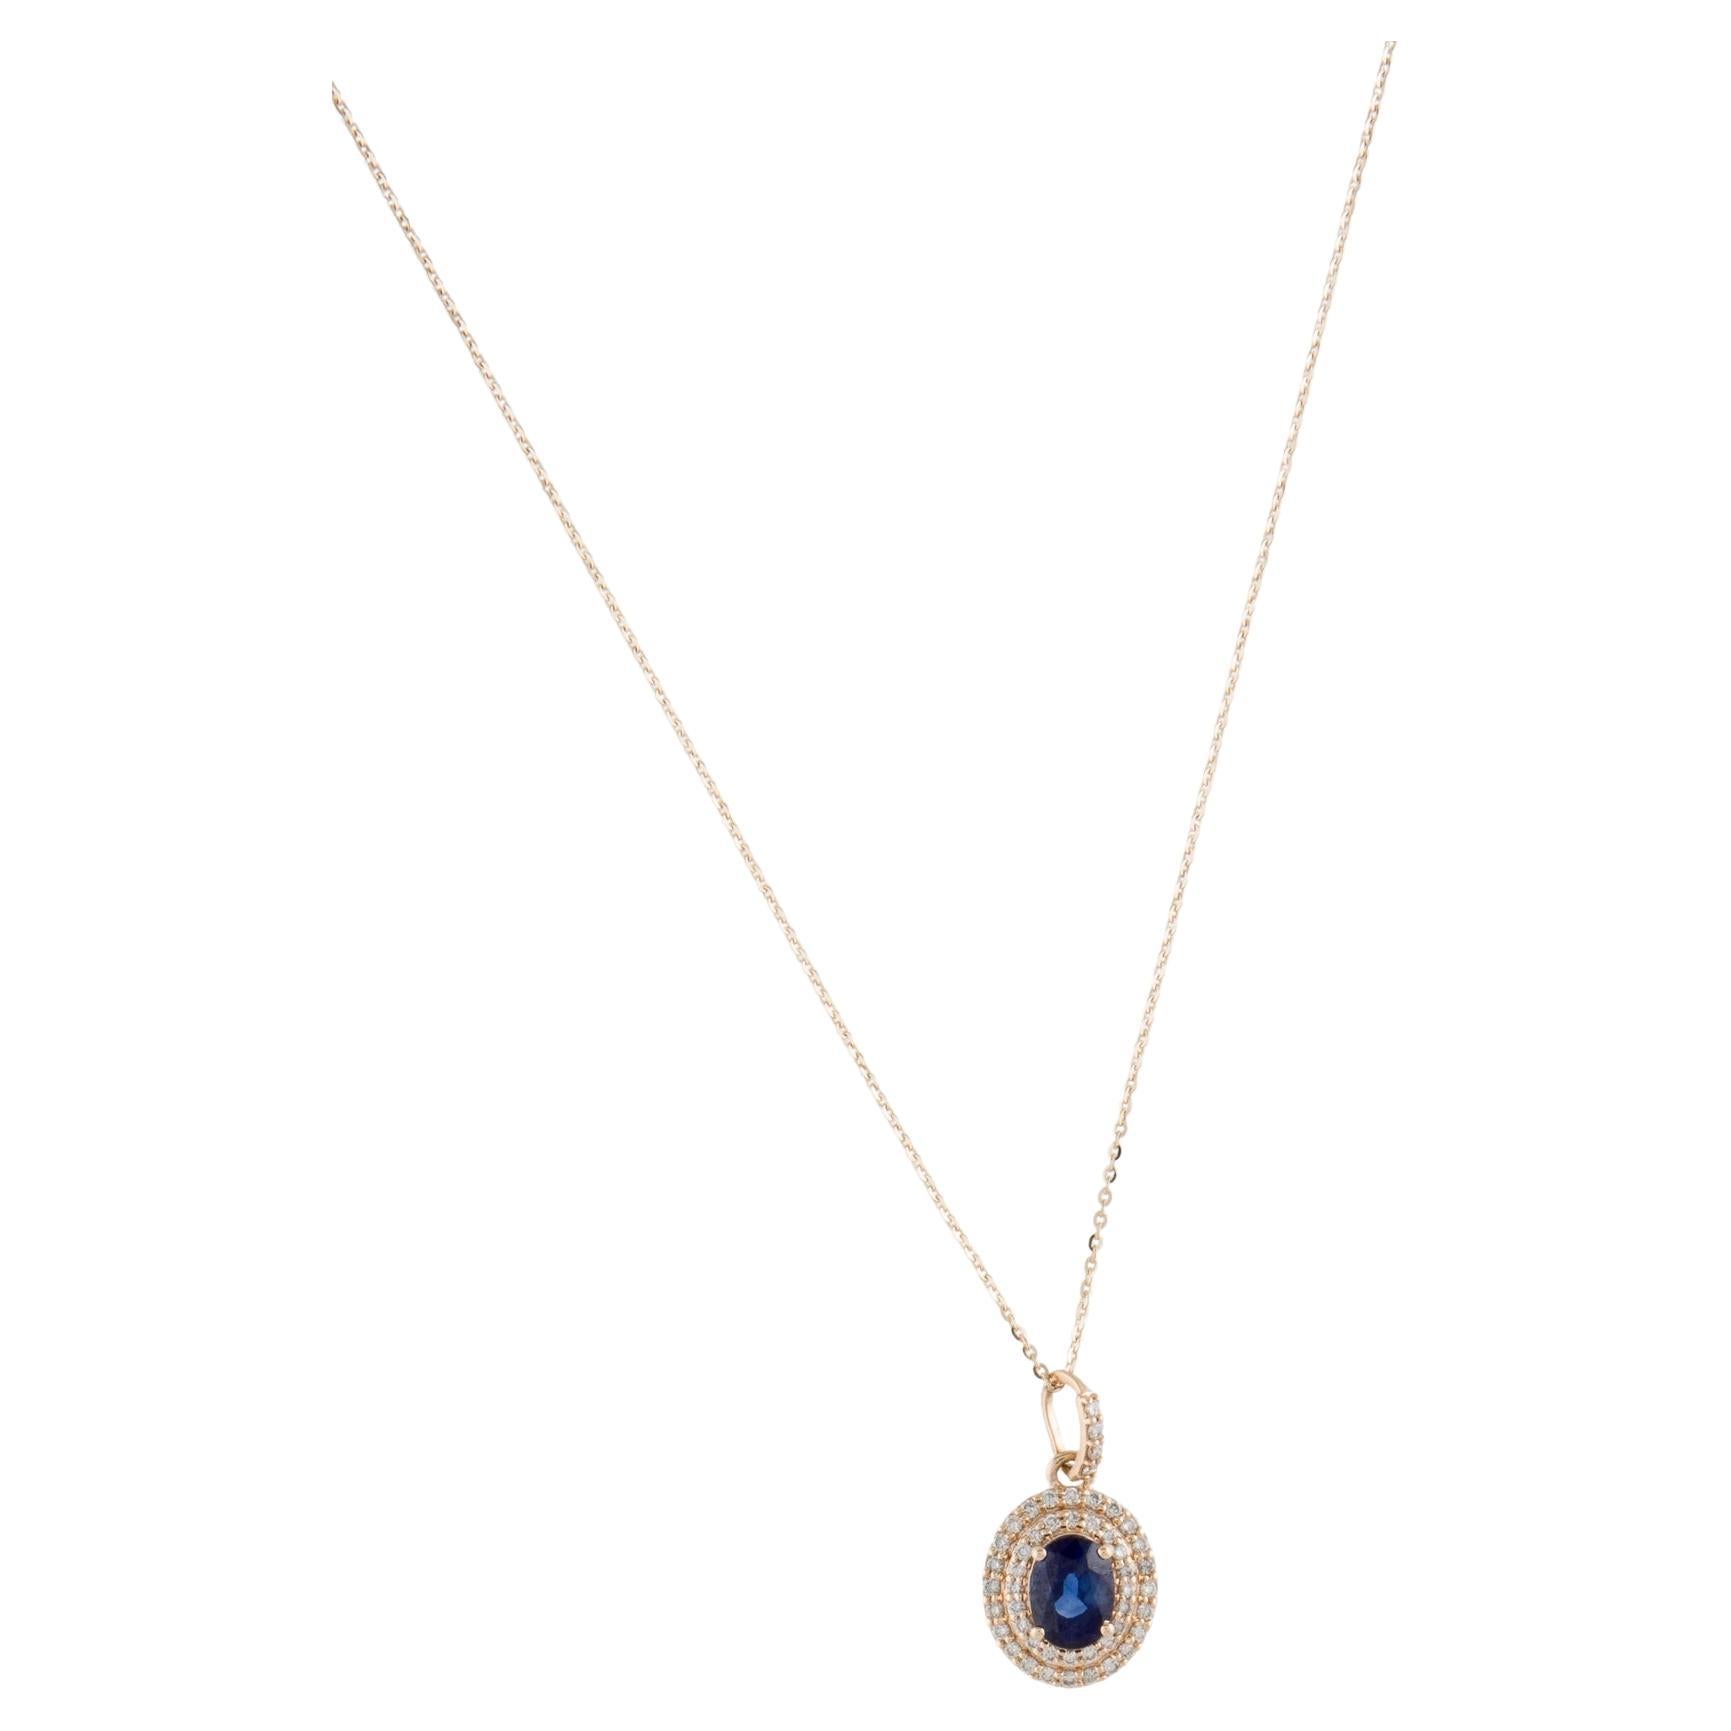 14K 1.43ct Sapphire & Diamond Pendant Necklace: Elegant Luxury Statement Jewelry